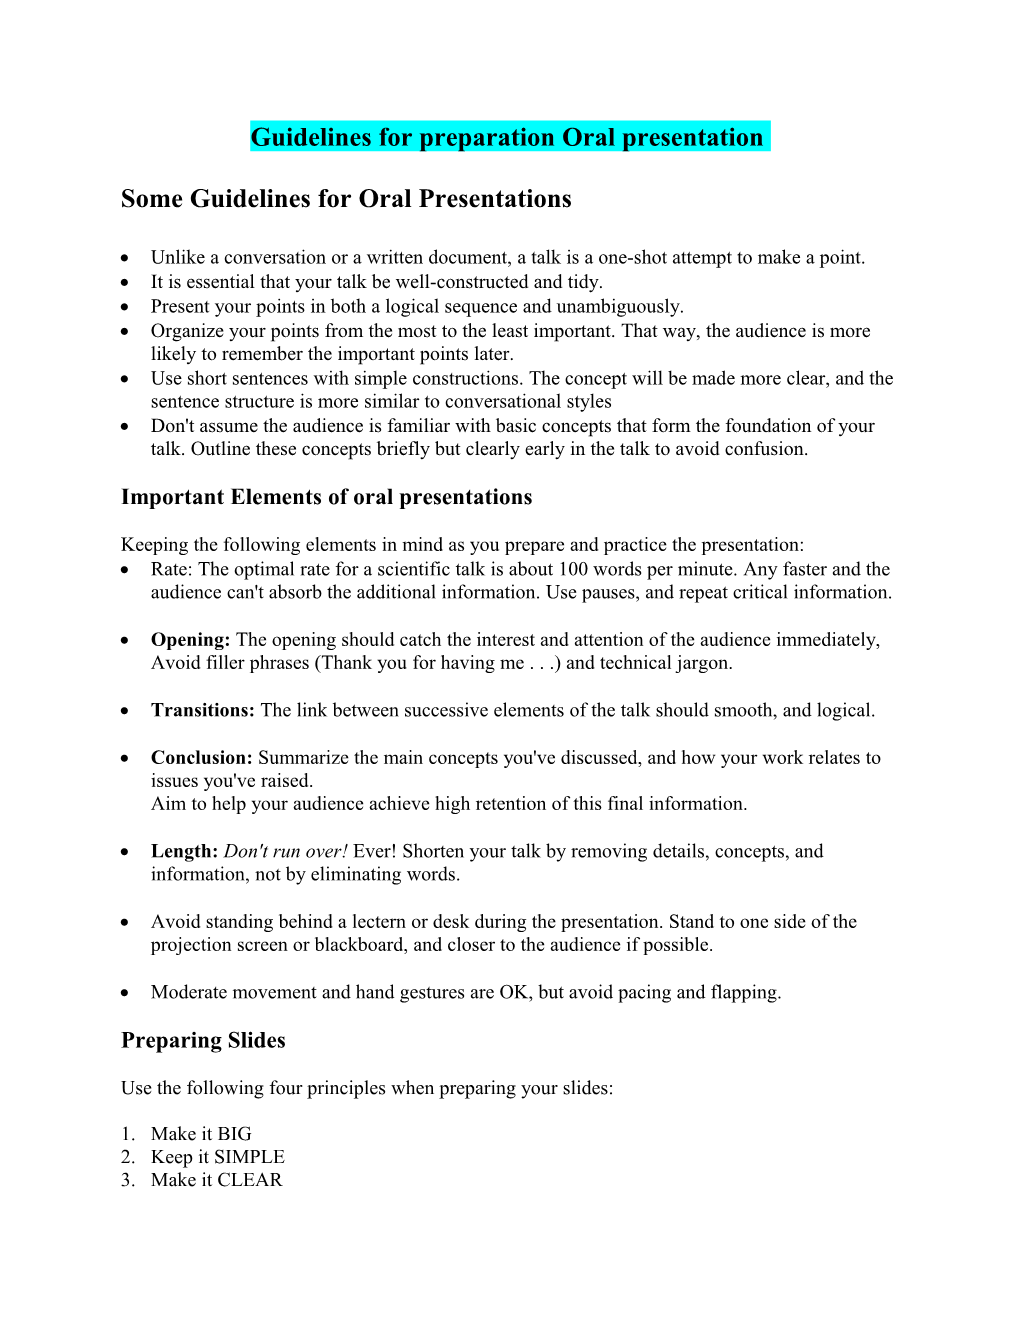 Guidelines for Preparation Oral Presentation